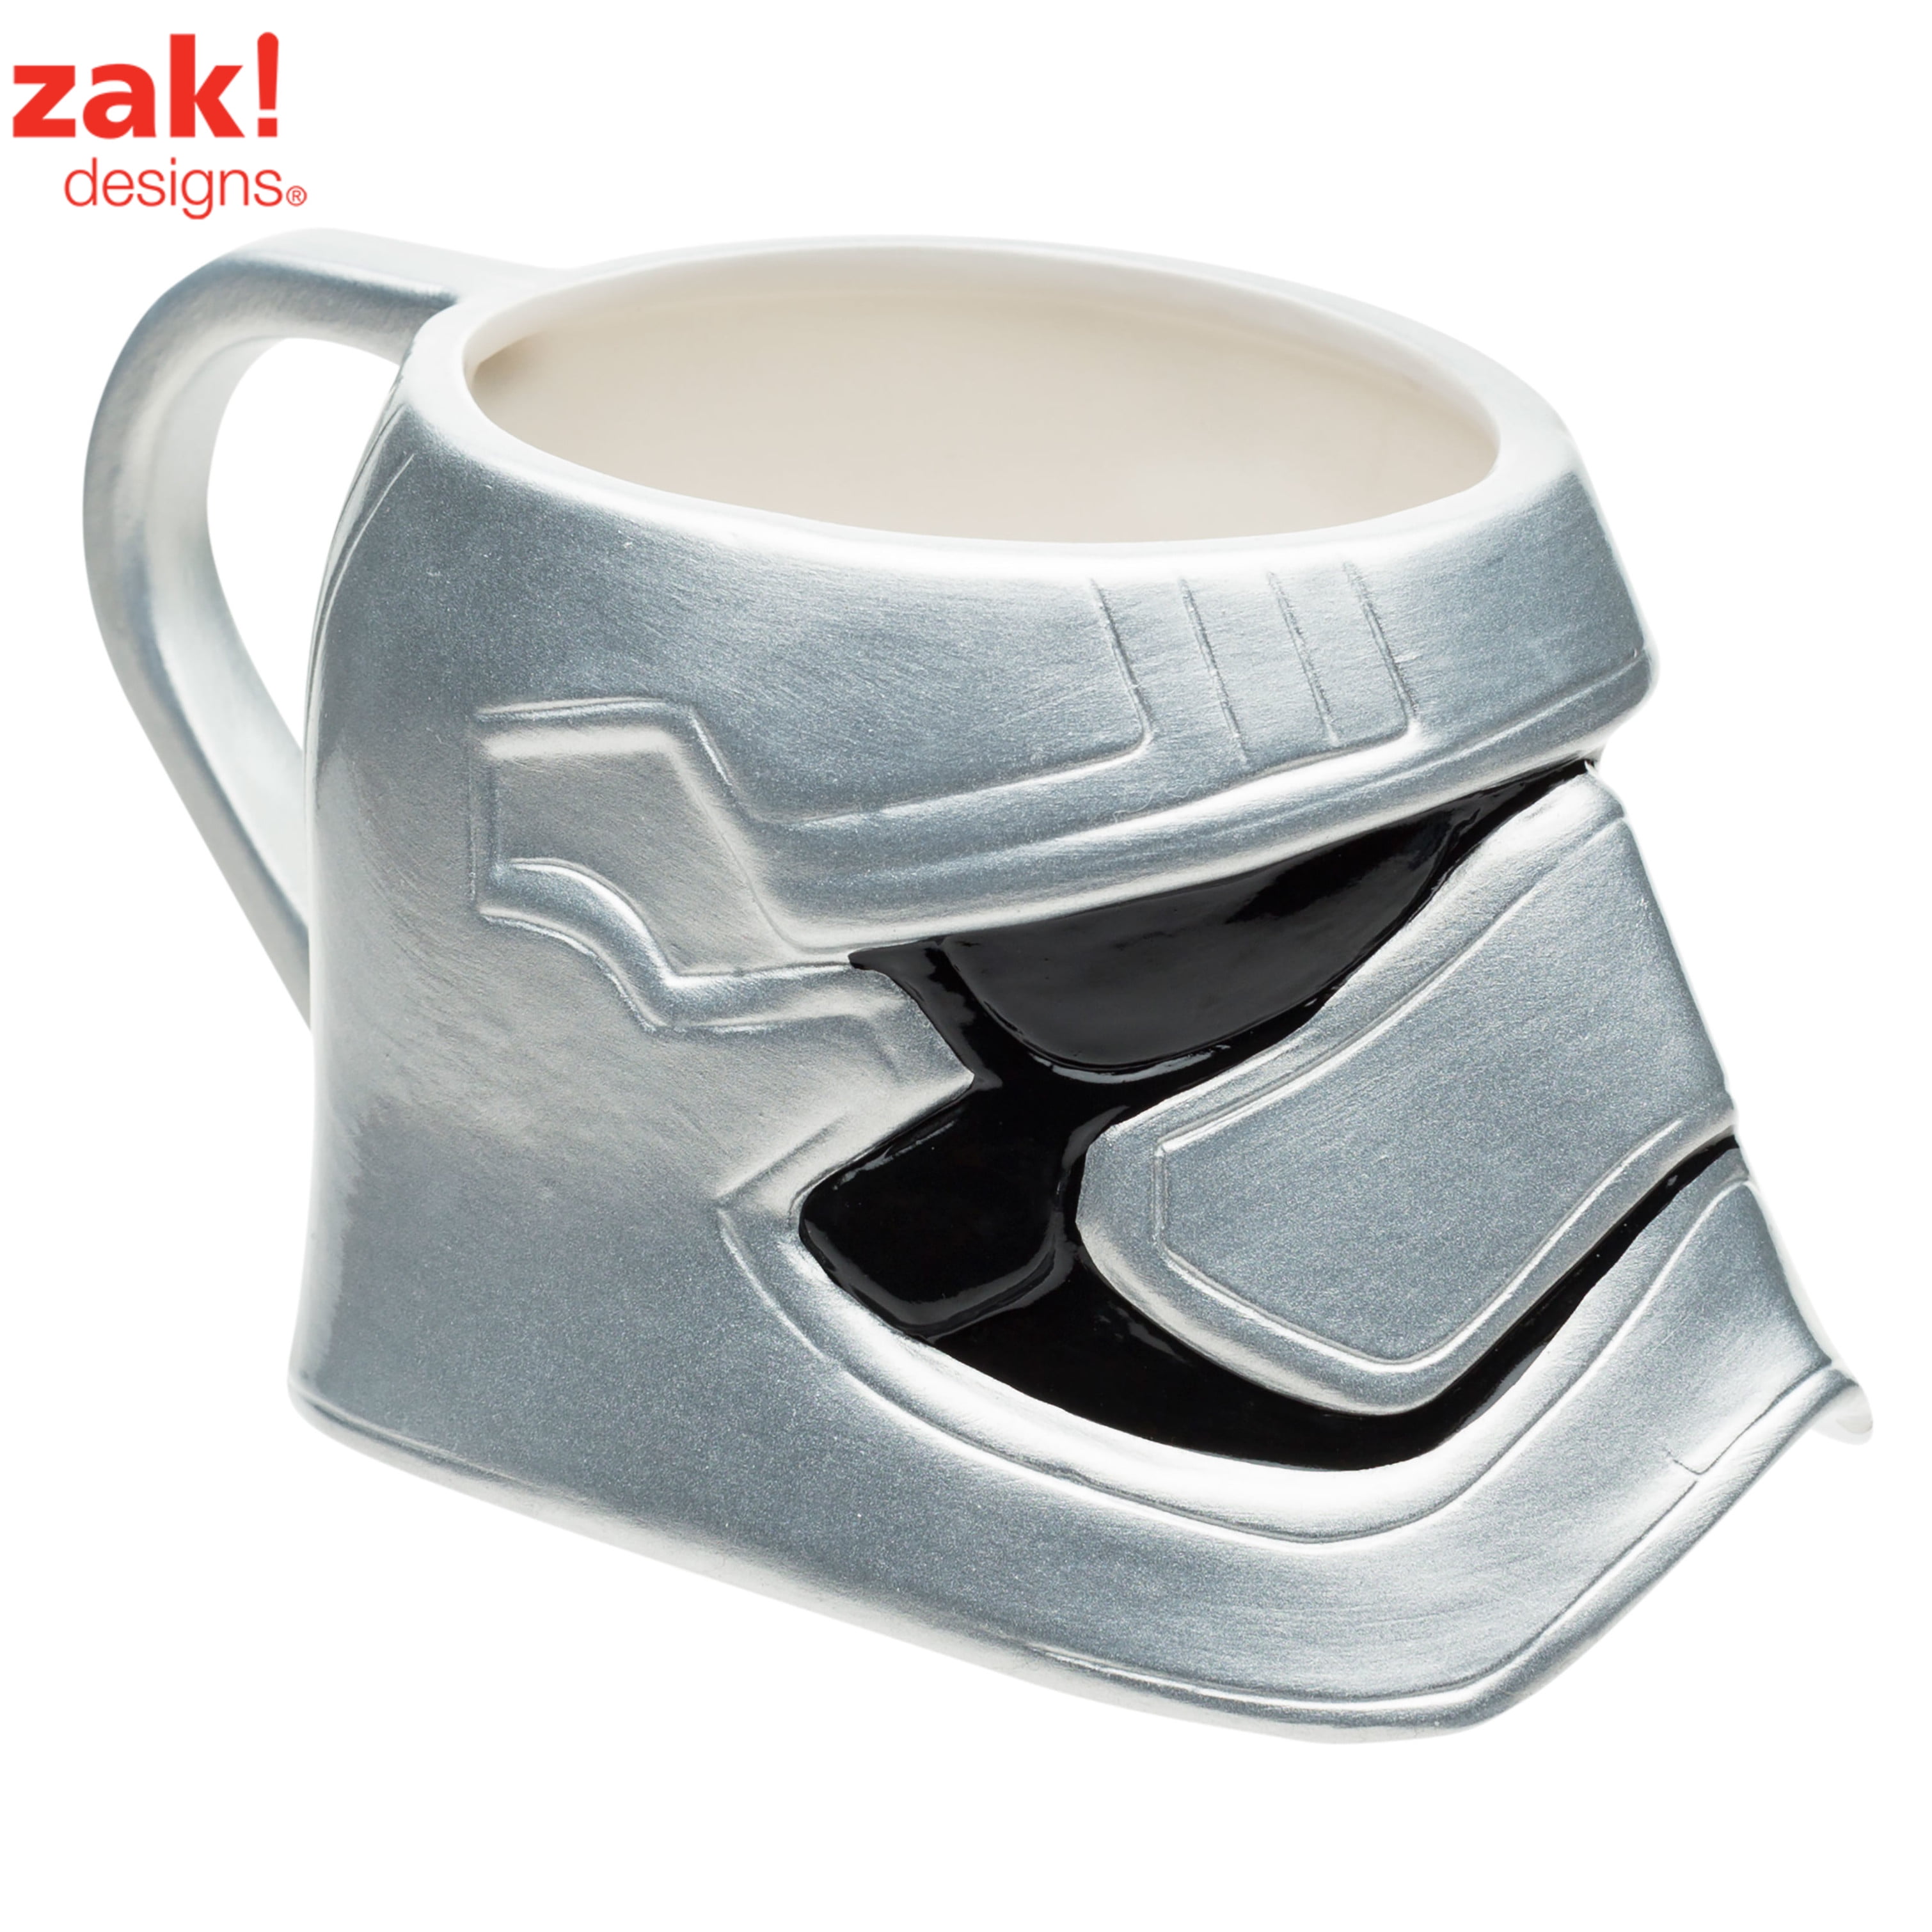 Star Wars Mugs: Ceramic mugs in the shape of dark side warriors.